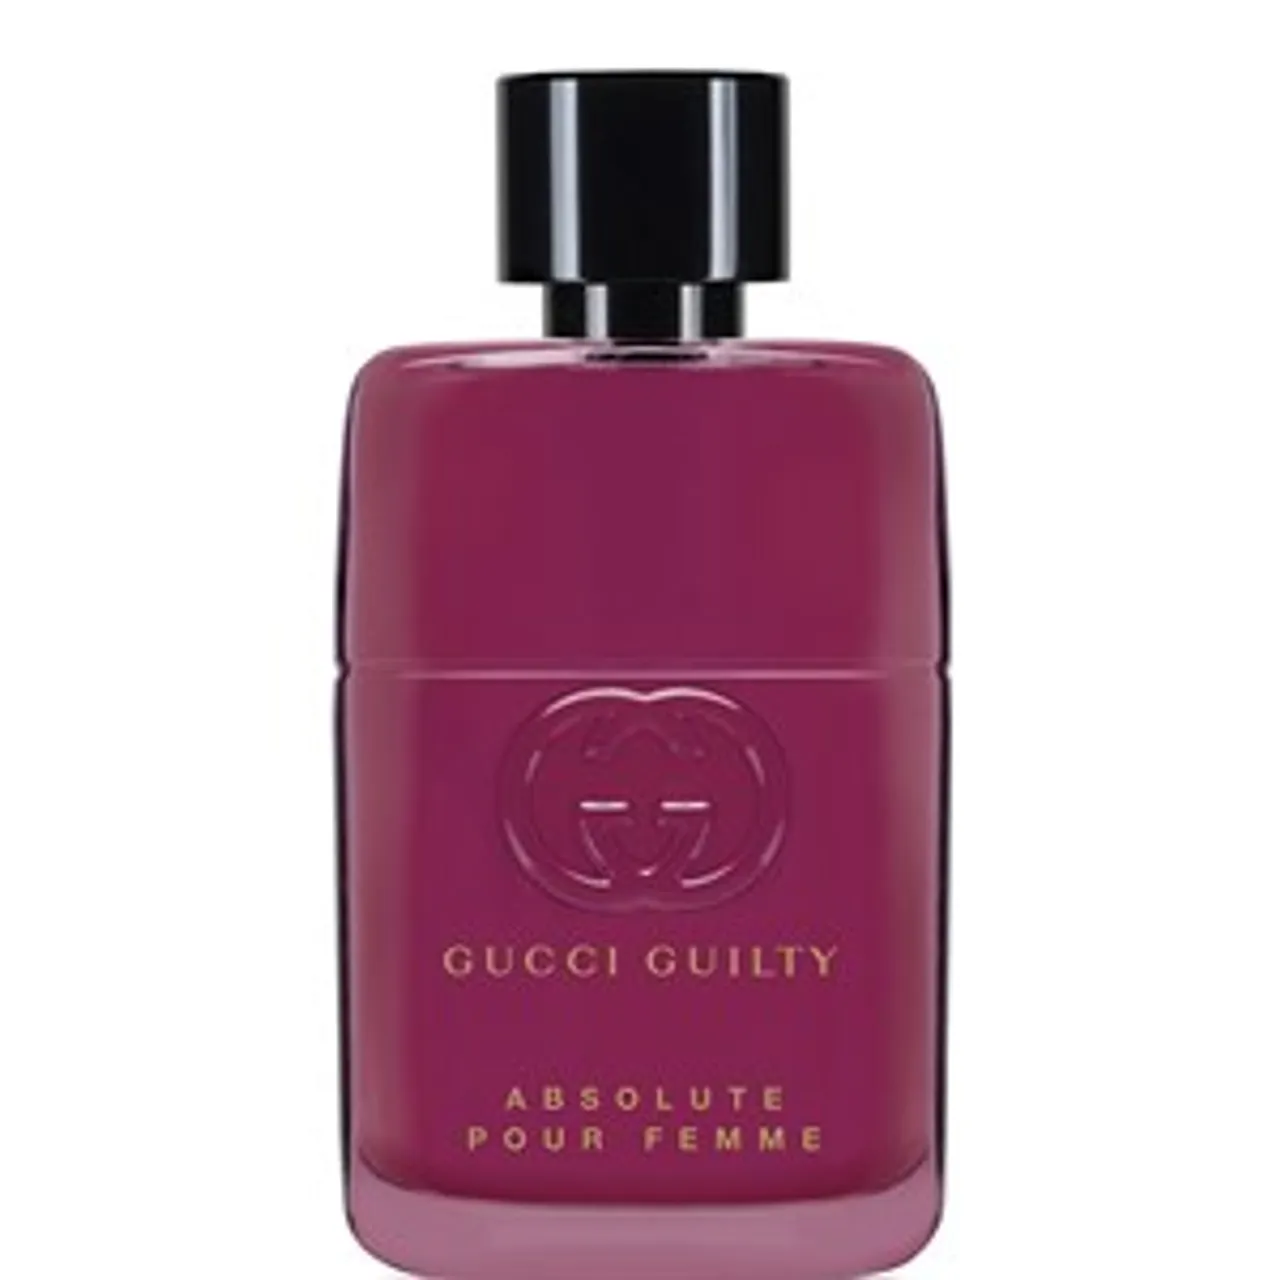 Gucci Eau de Parfum Spray 2 50 ml